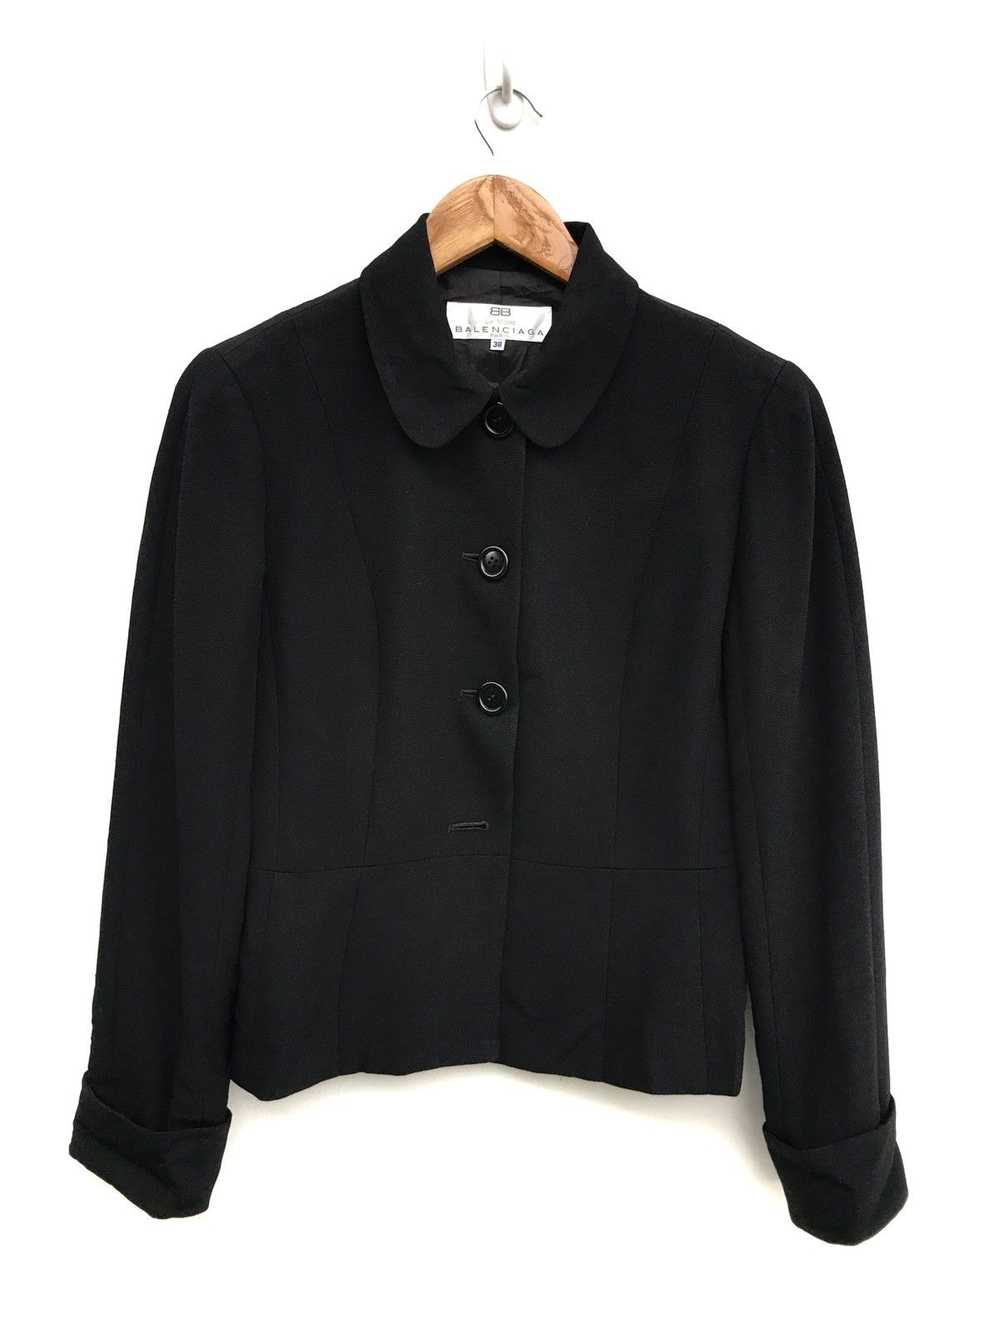 Balenciaga Balenciaga Black Coat Jacket - image 1